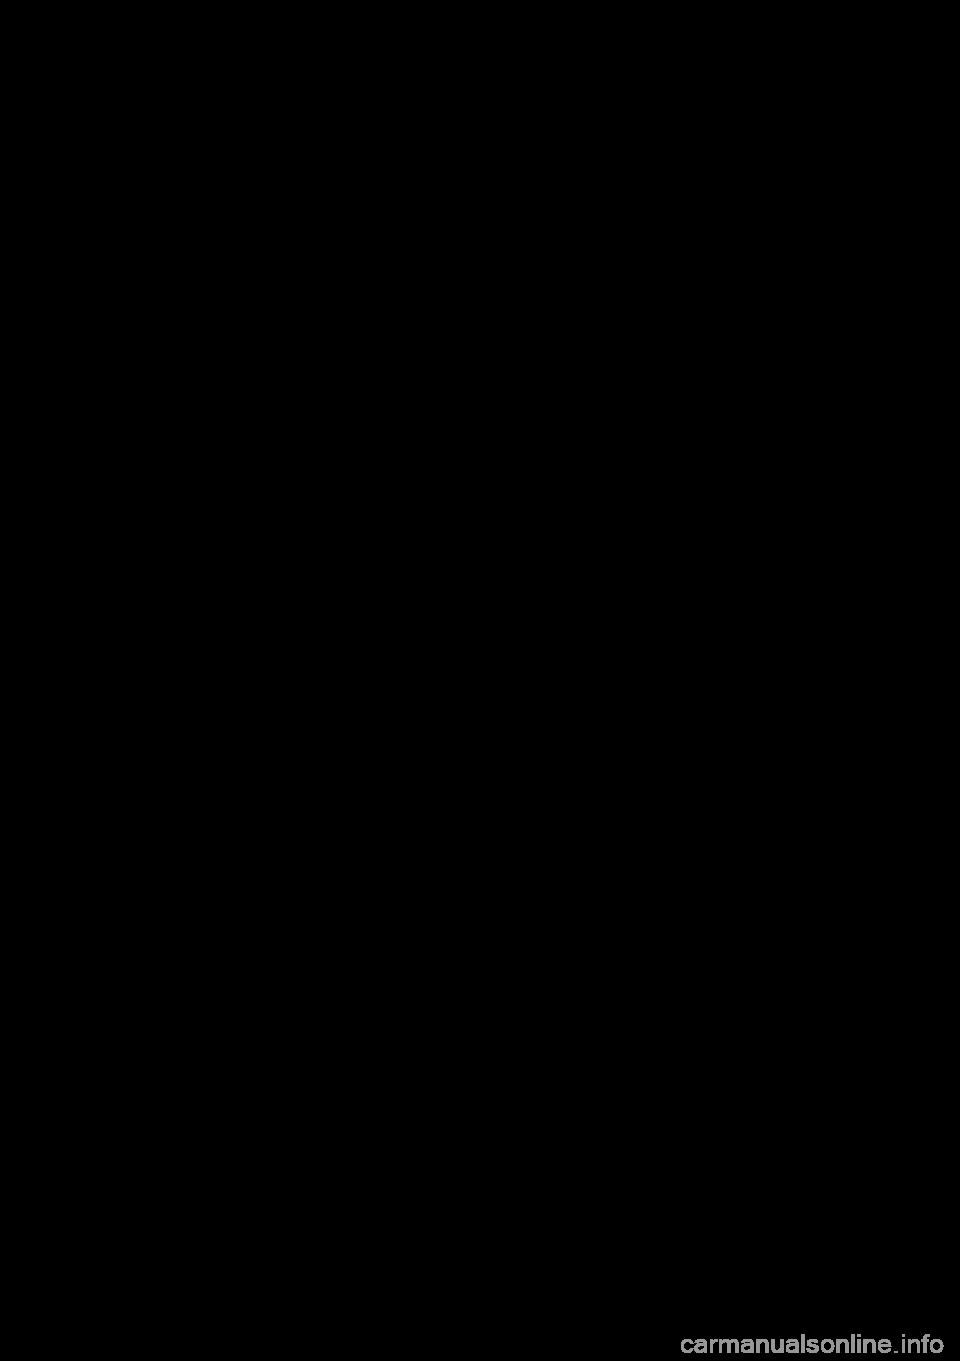 SUZUKI GRAND VITARA 2003 2.G Service Owners Manual YH4
GRAND
VITARA
GENERAL INFORMATION 0A-21
A
ABS : Anti-lock Brake System
ATDC : After Top Dead Center
API : American Petroleum Institute
ATF : Automatic Transmission Fluid
ALR : Automatic Locking Ret